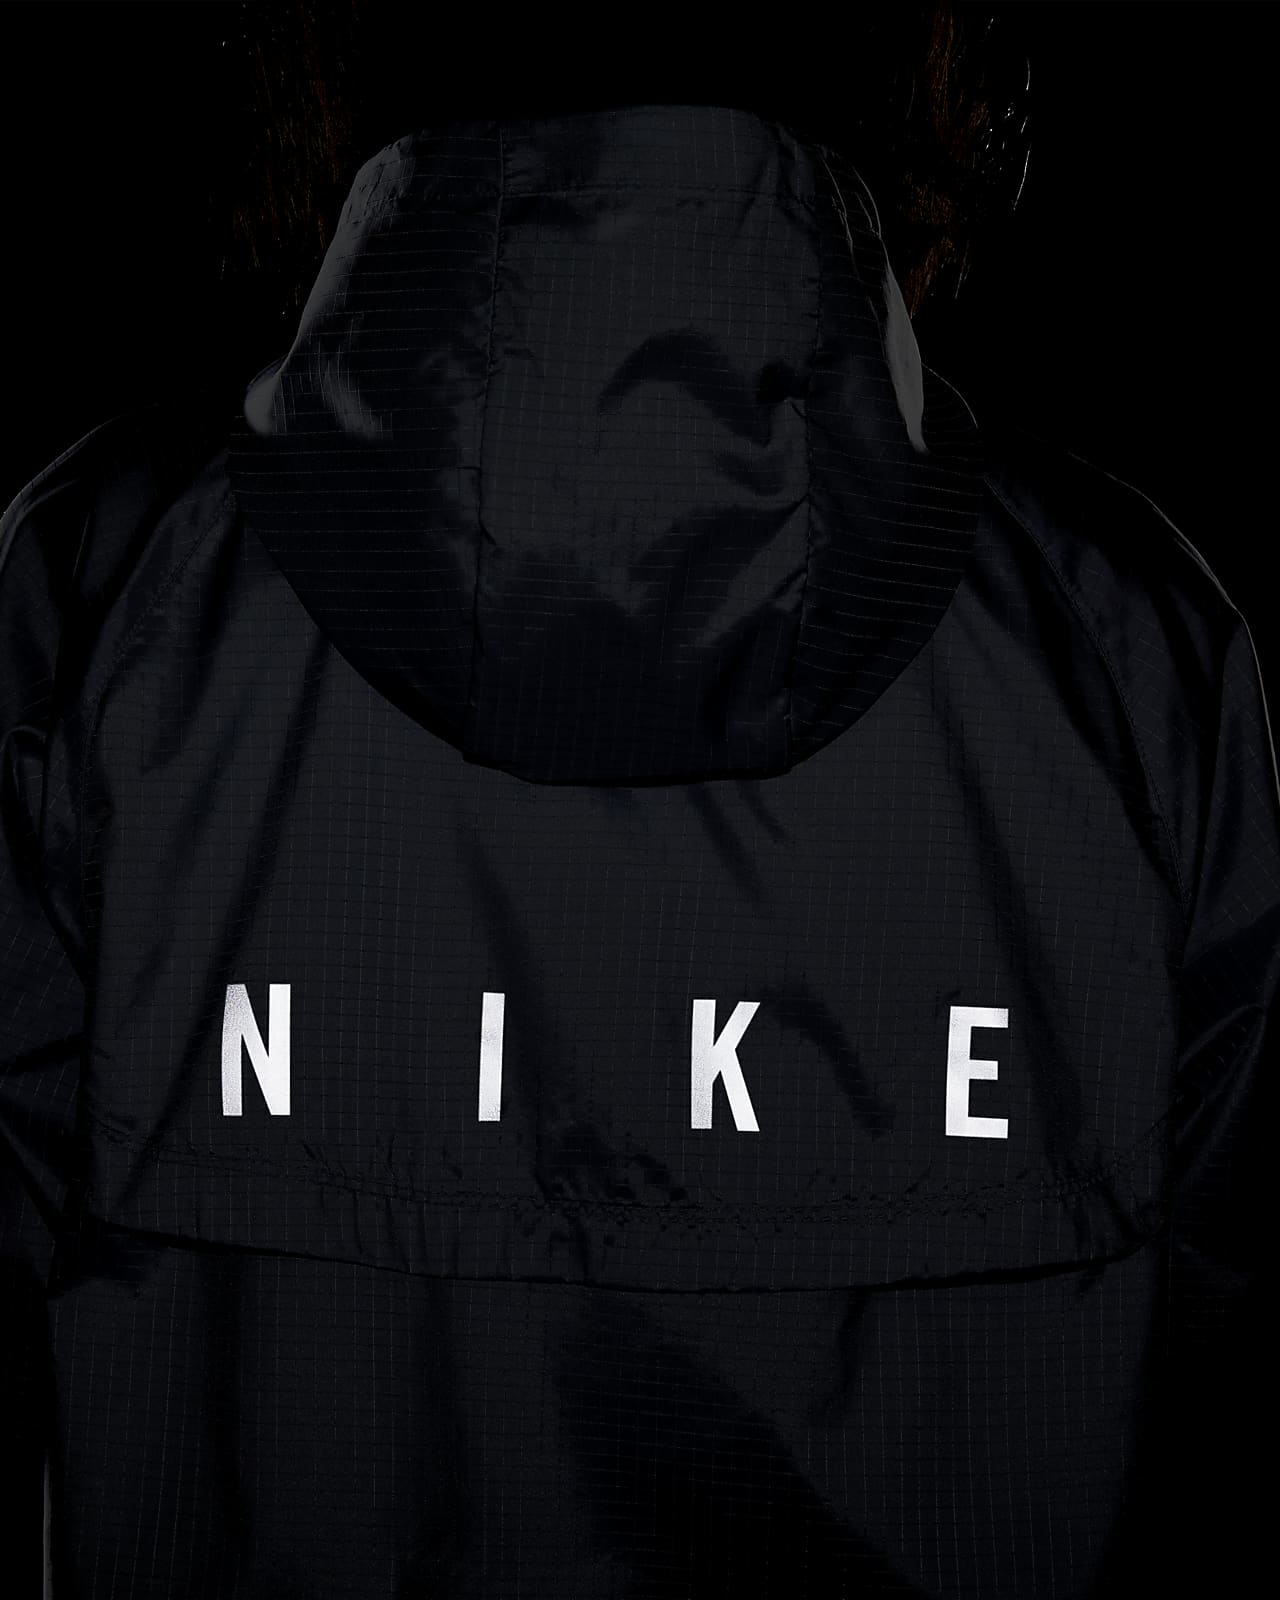 nike essential women's running jacket